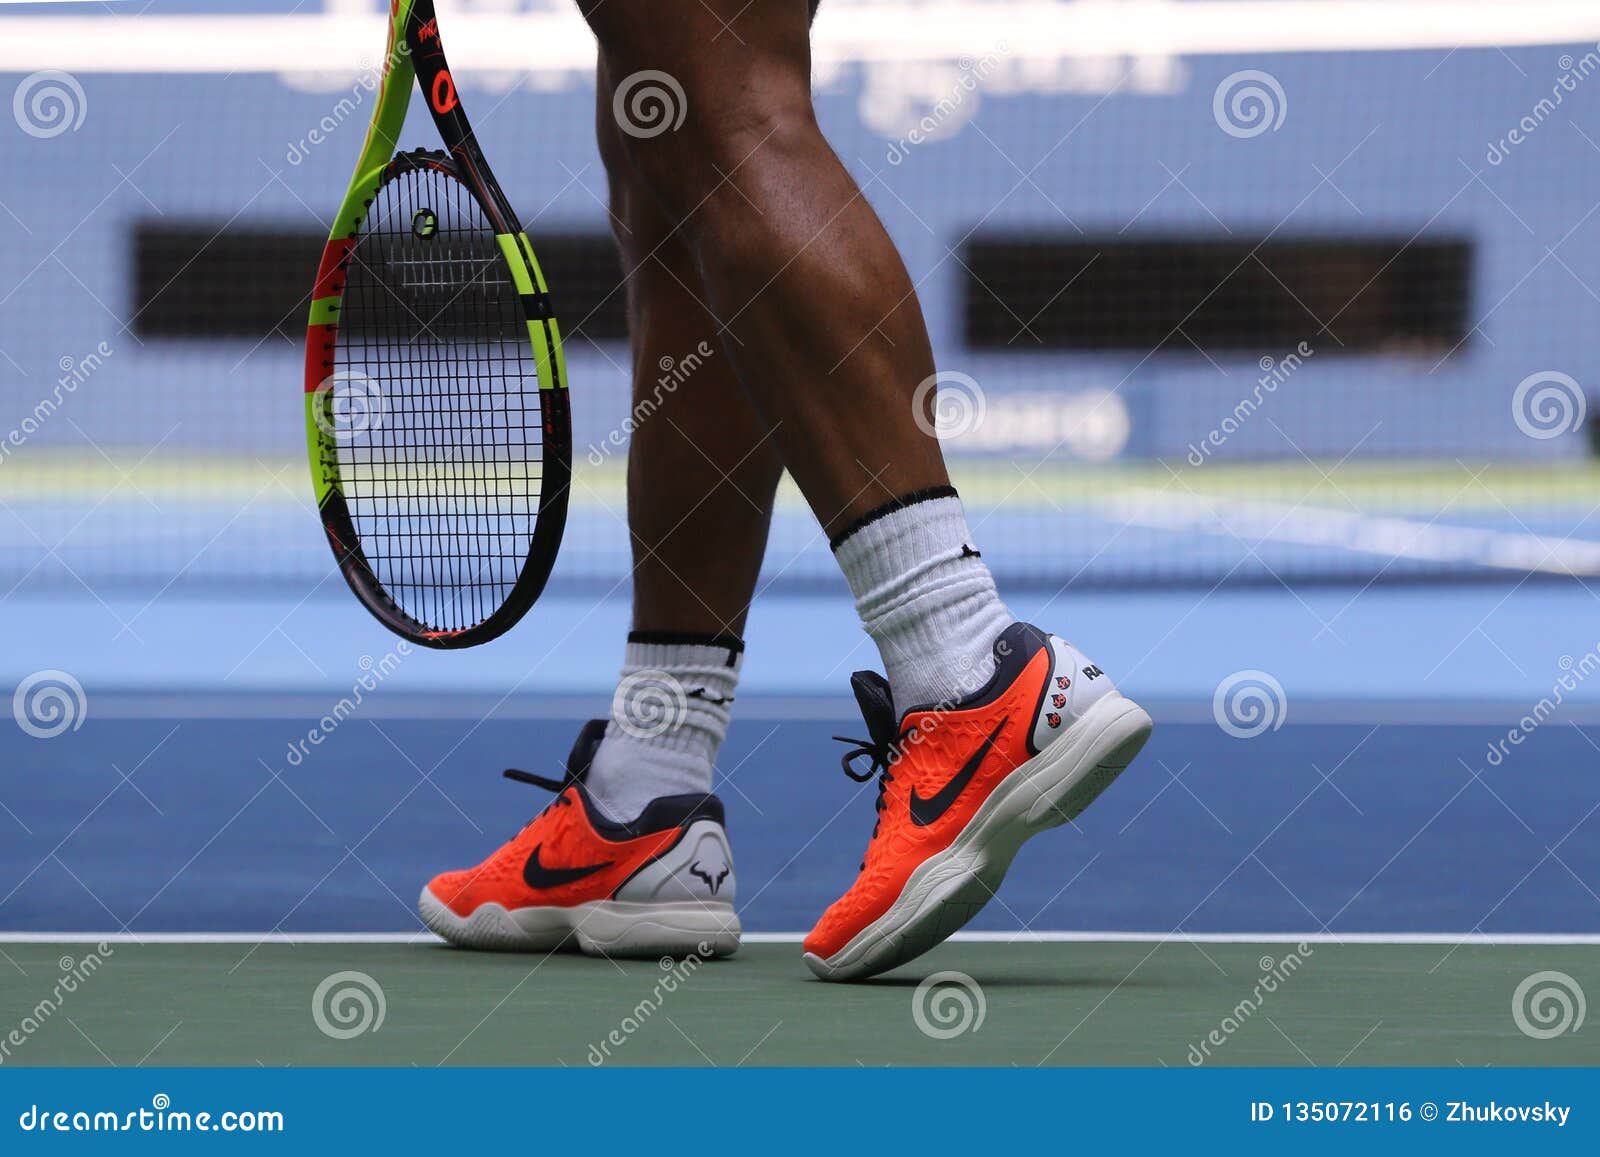 relé Cabra miércoles Grand Slam Champion Rafael Nadal of Spain Wears Custom Nike Tennis Shoes  during US Open 2018 Editorial Photo - Image of editorial, rafa: 135072116